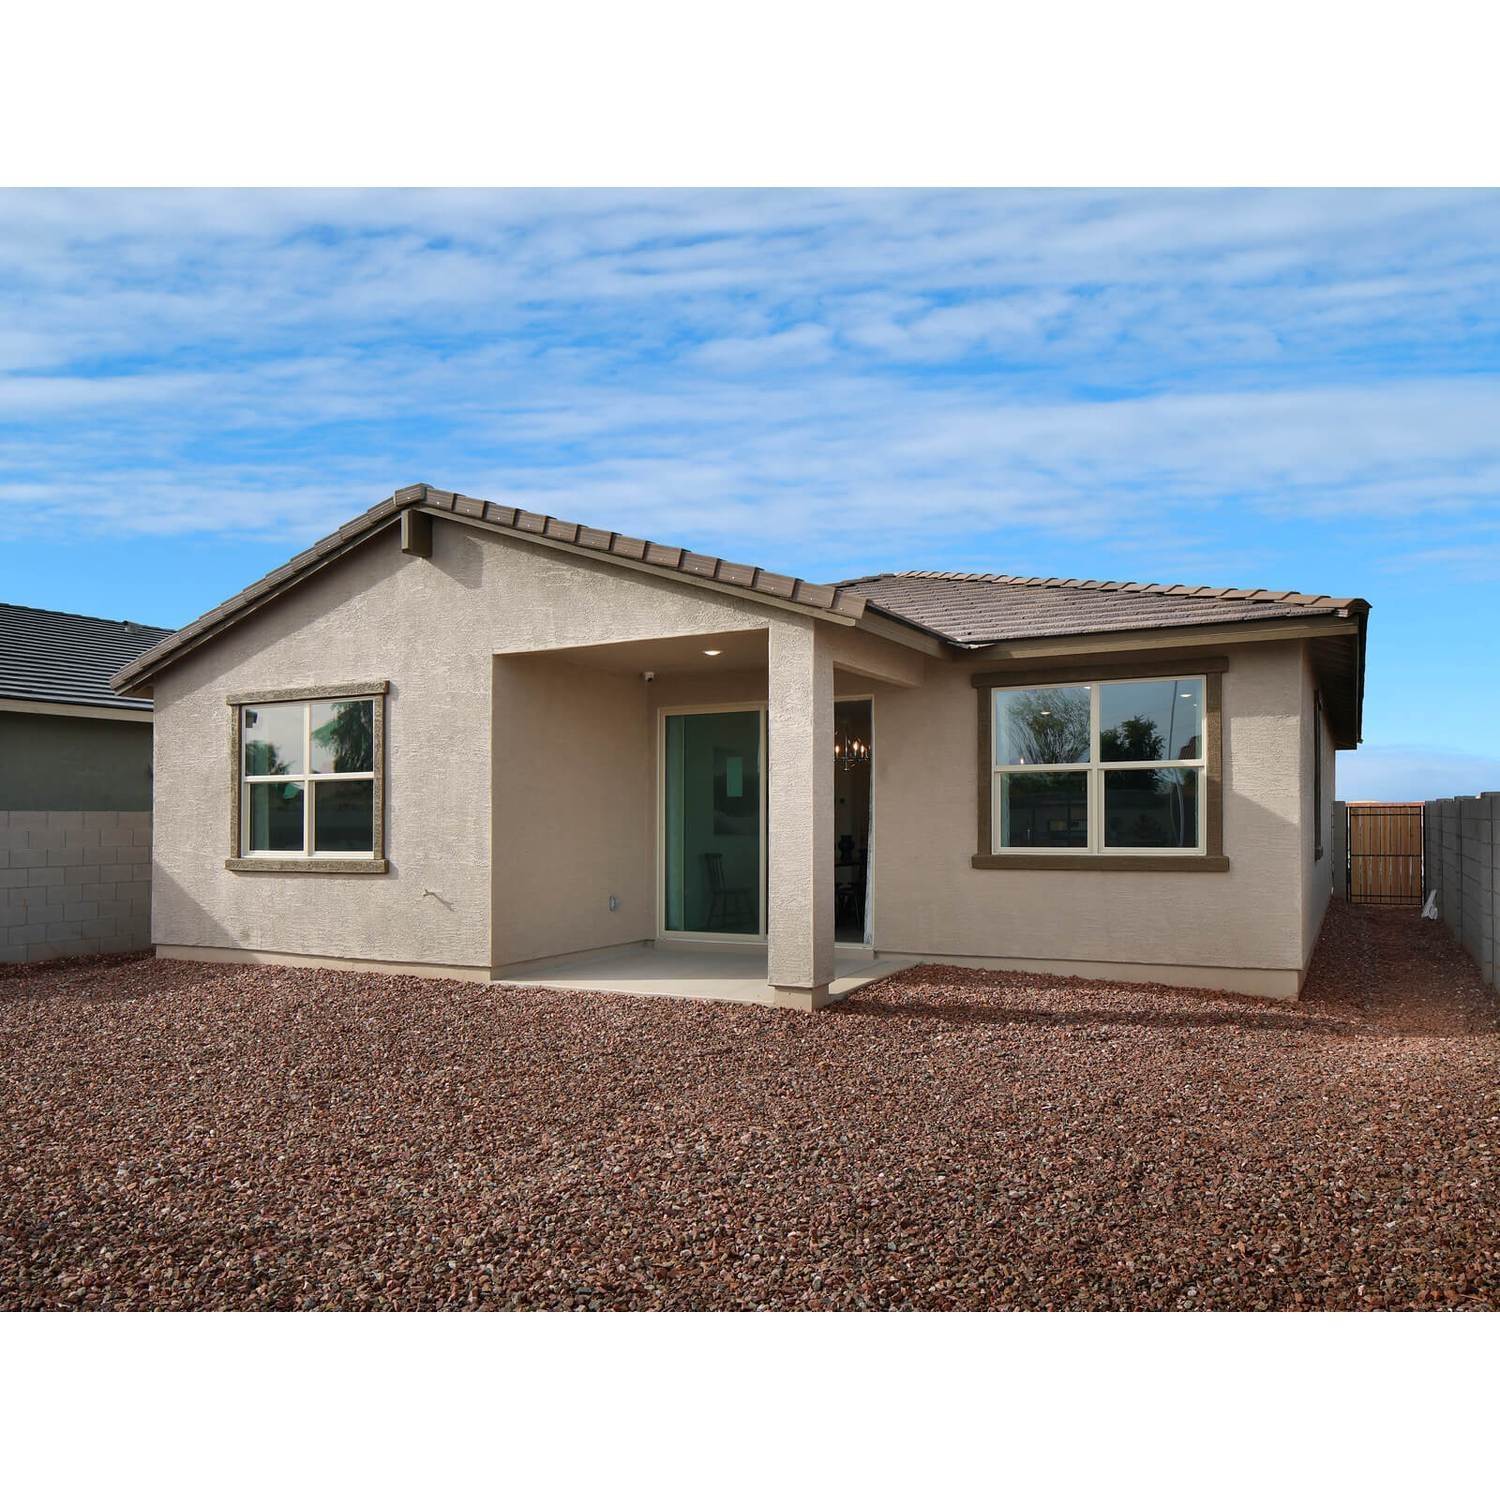 4. Hurley Ranch - Estate Series building at 8954 Albeniz Place, Tolleson, AZ 85353